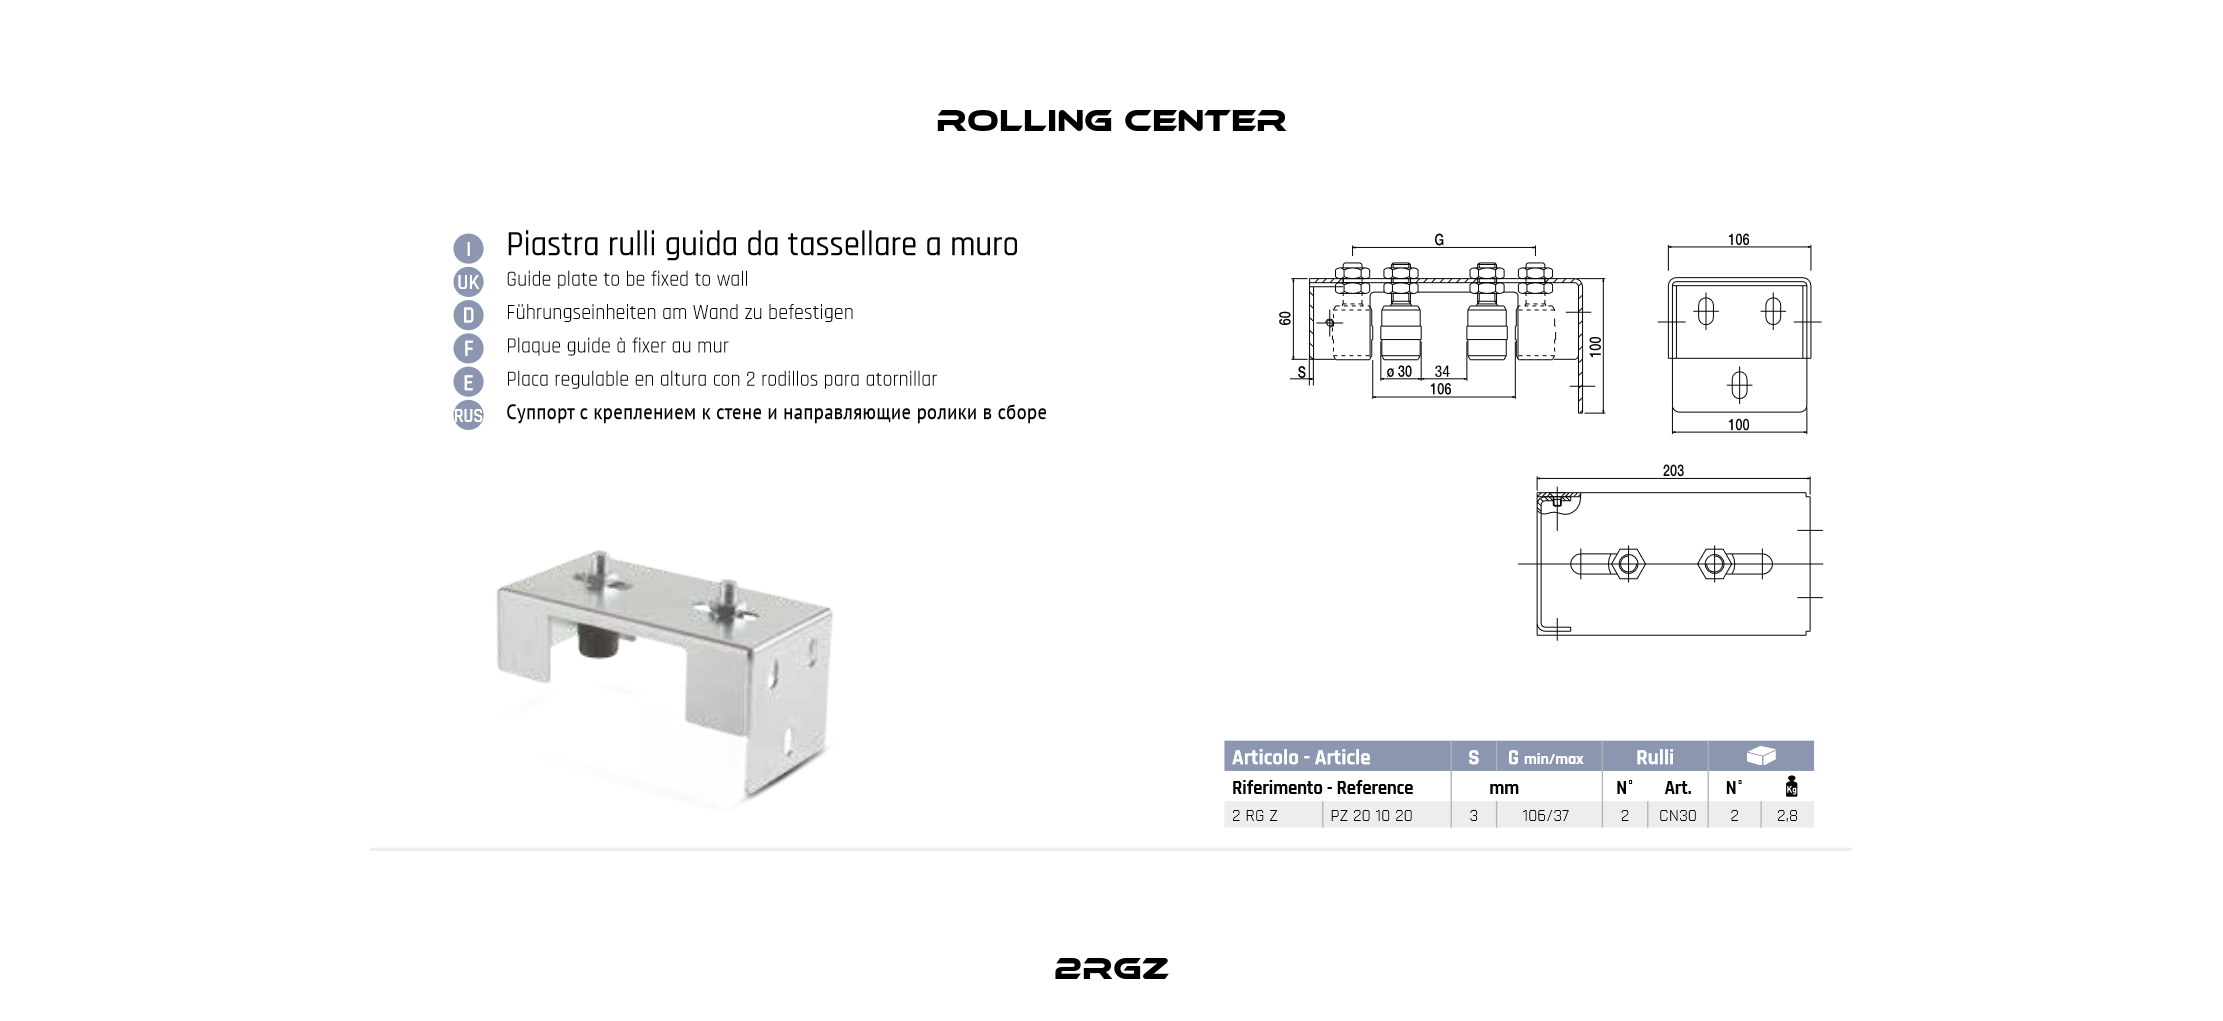 2RGZ Rolling Center